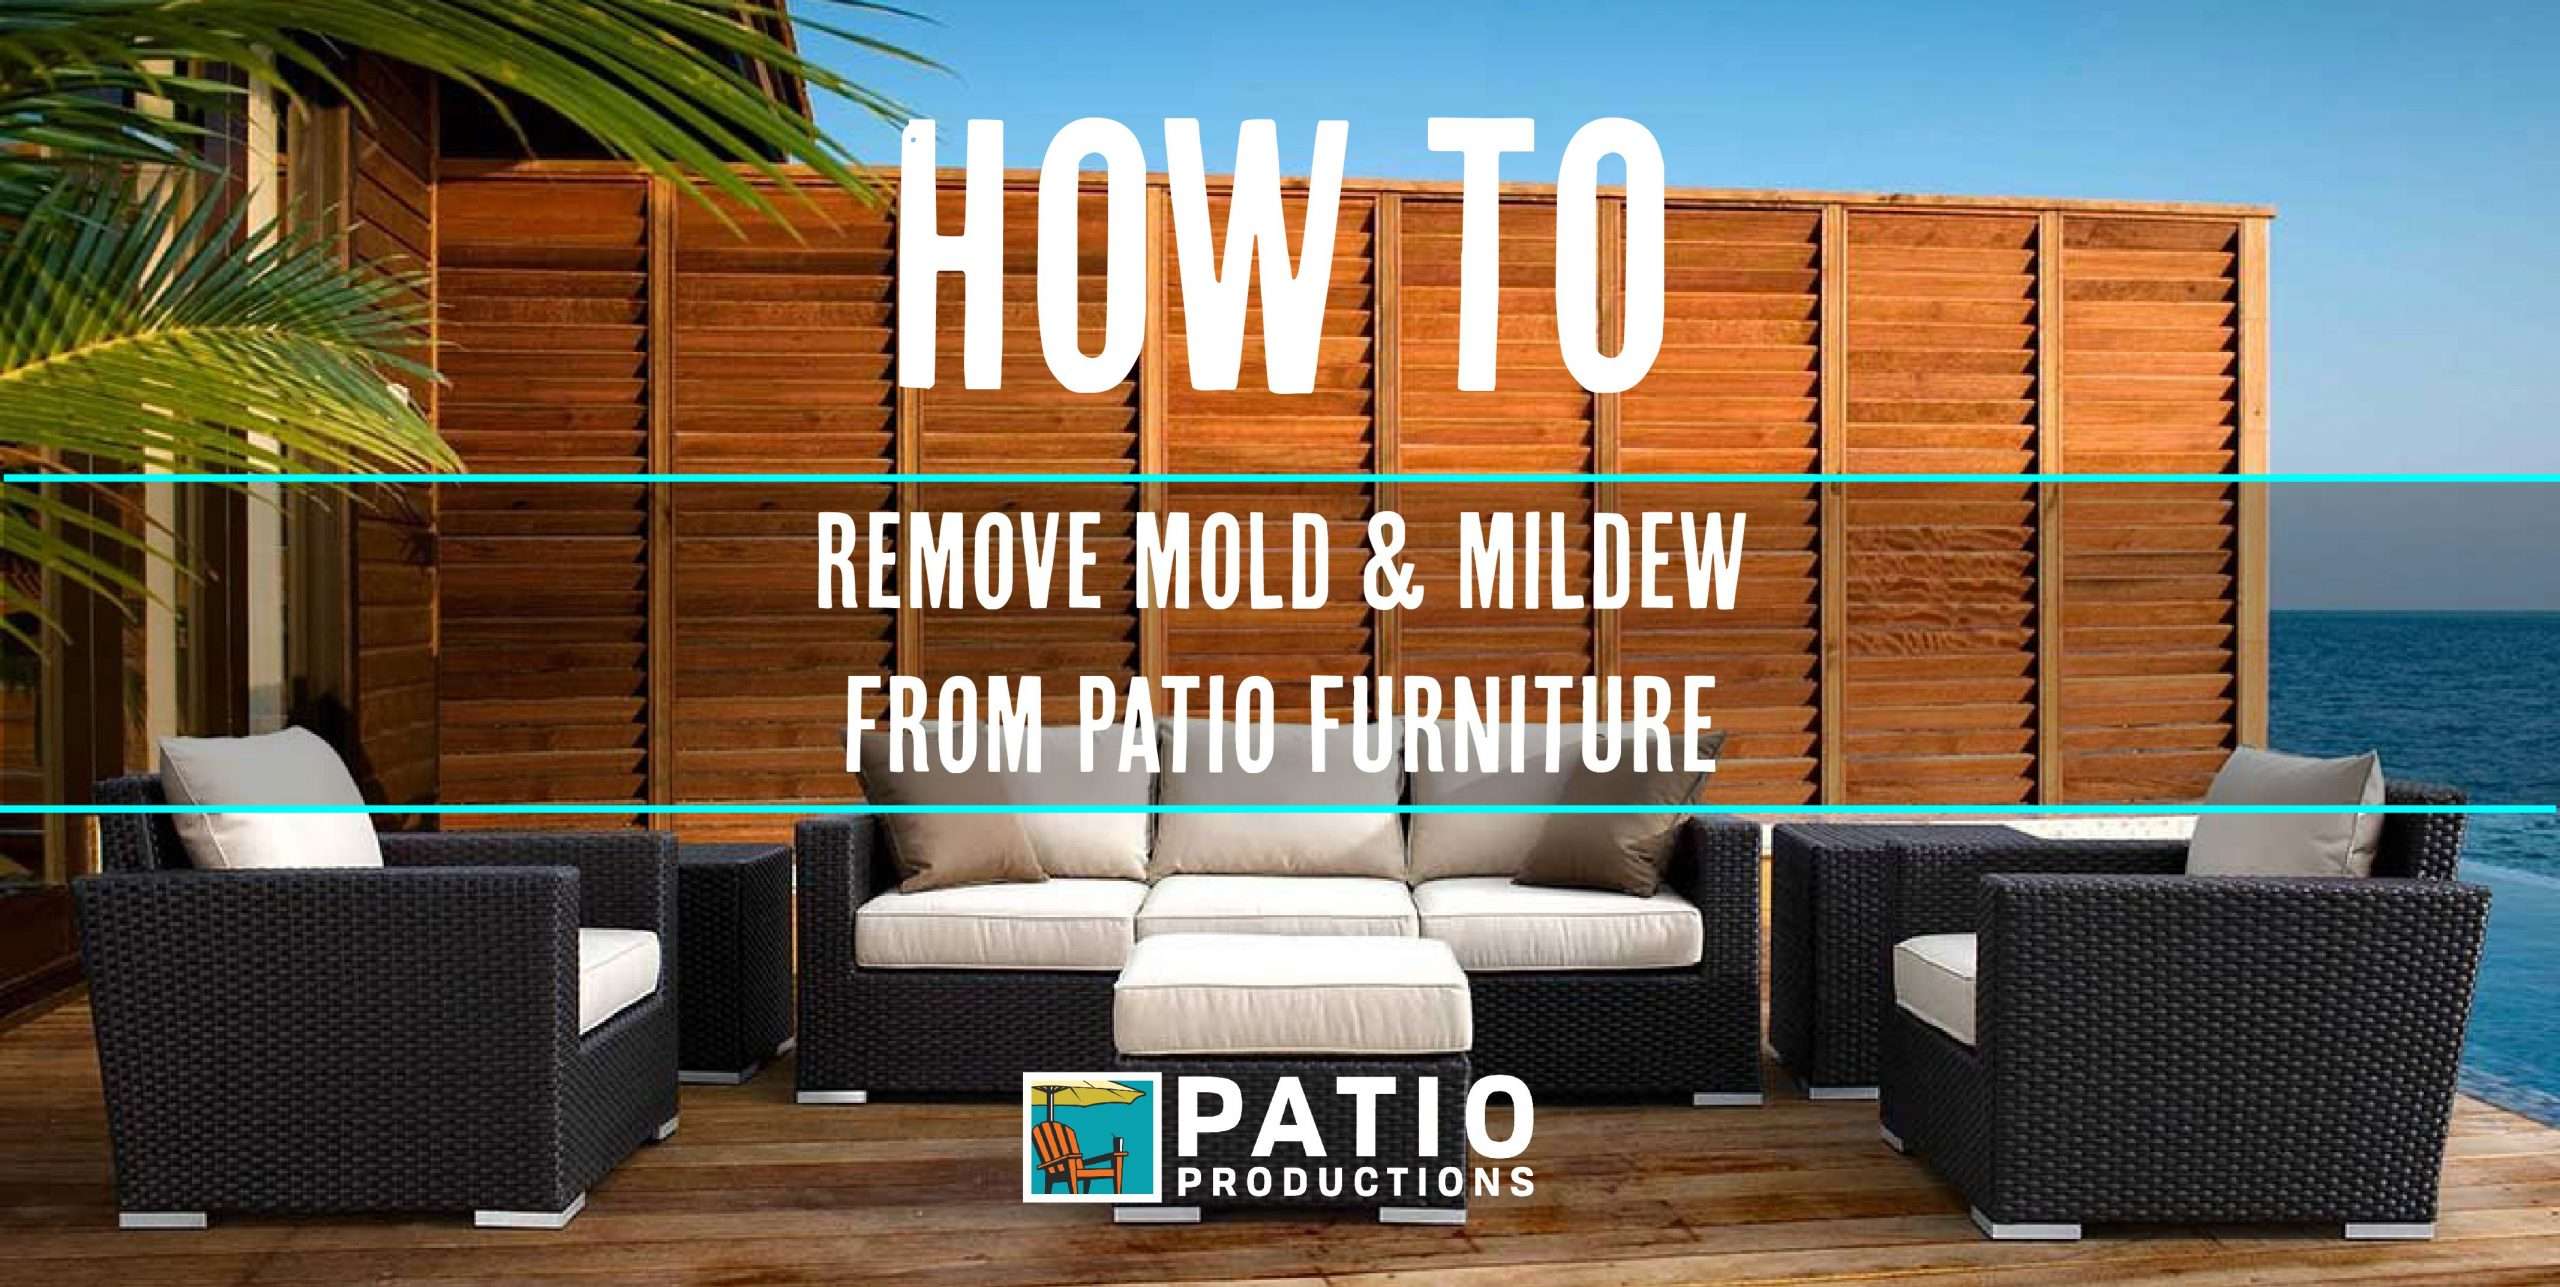 Patio Furniture Cushions, Best Way To Clean Garden Furniture Cushions